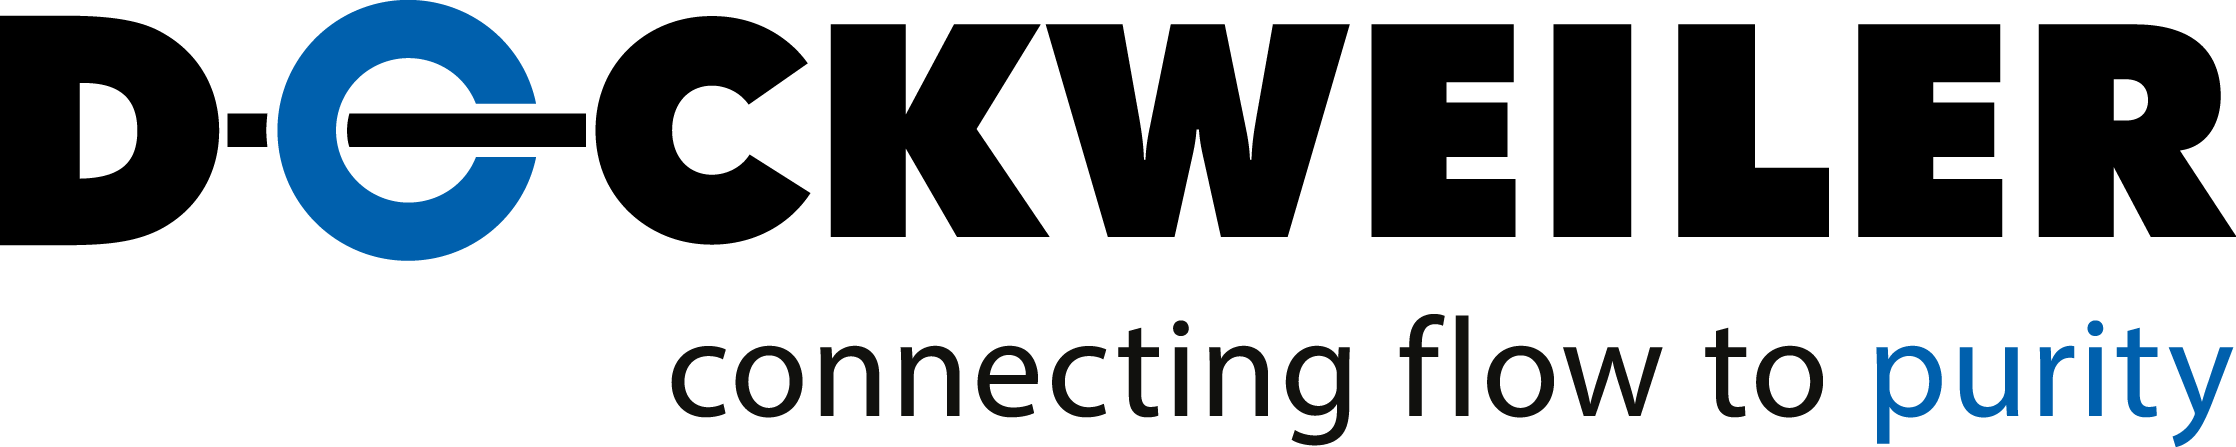 Large logo of Dockweiler